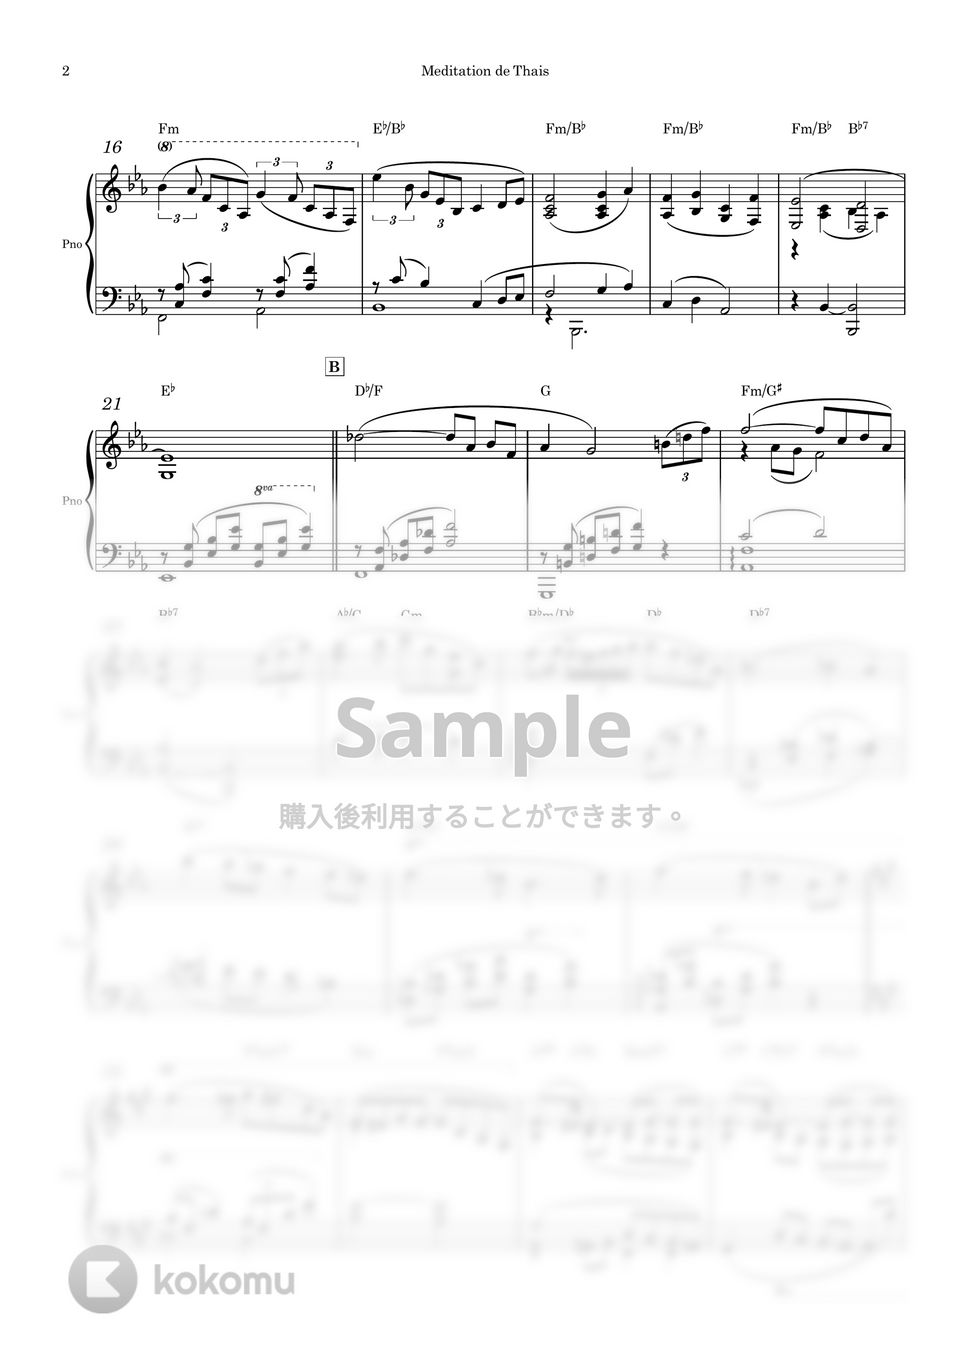 Massenet Jules - タイスの瞑想曲 (ピアノソロ) by Piano QQQ